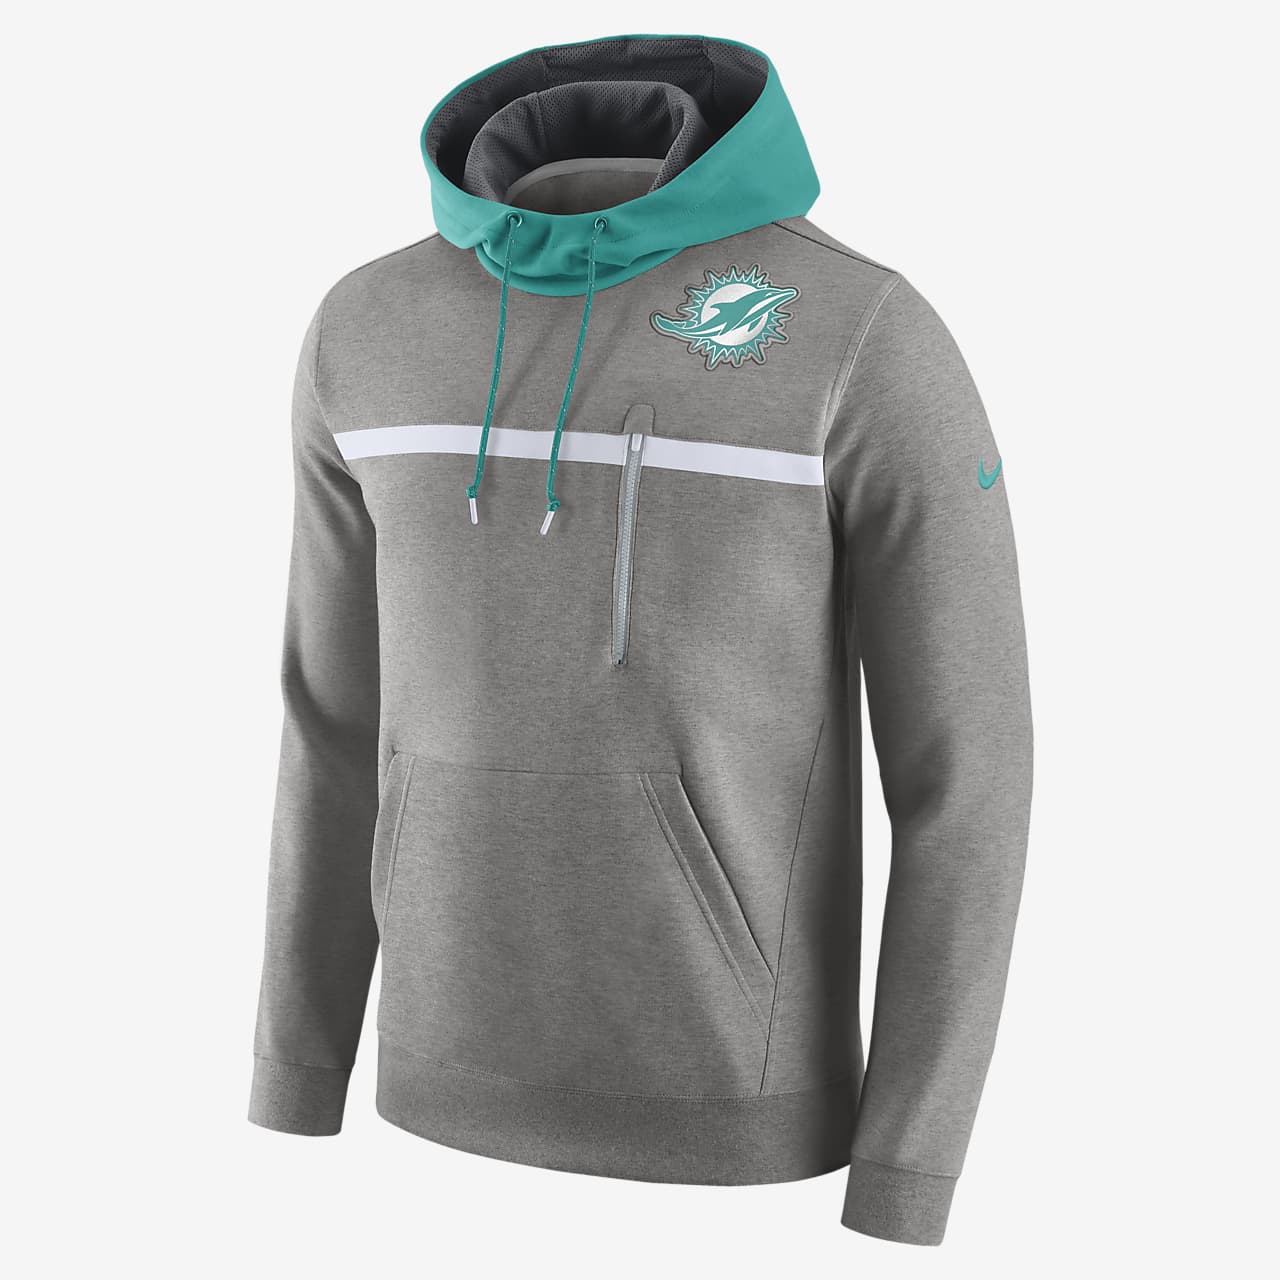 Nike Championship Drive Sweatshirt (NFL Dolphins) Men's Hoodie